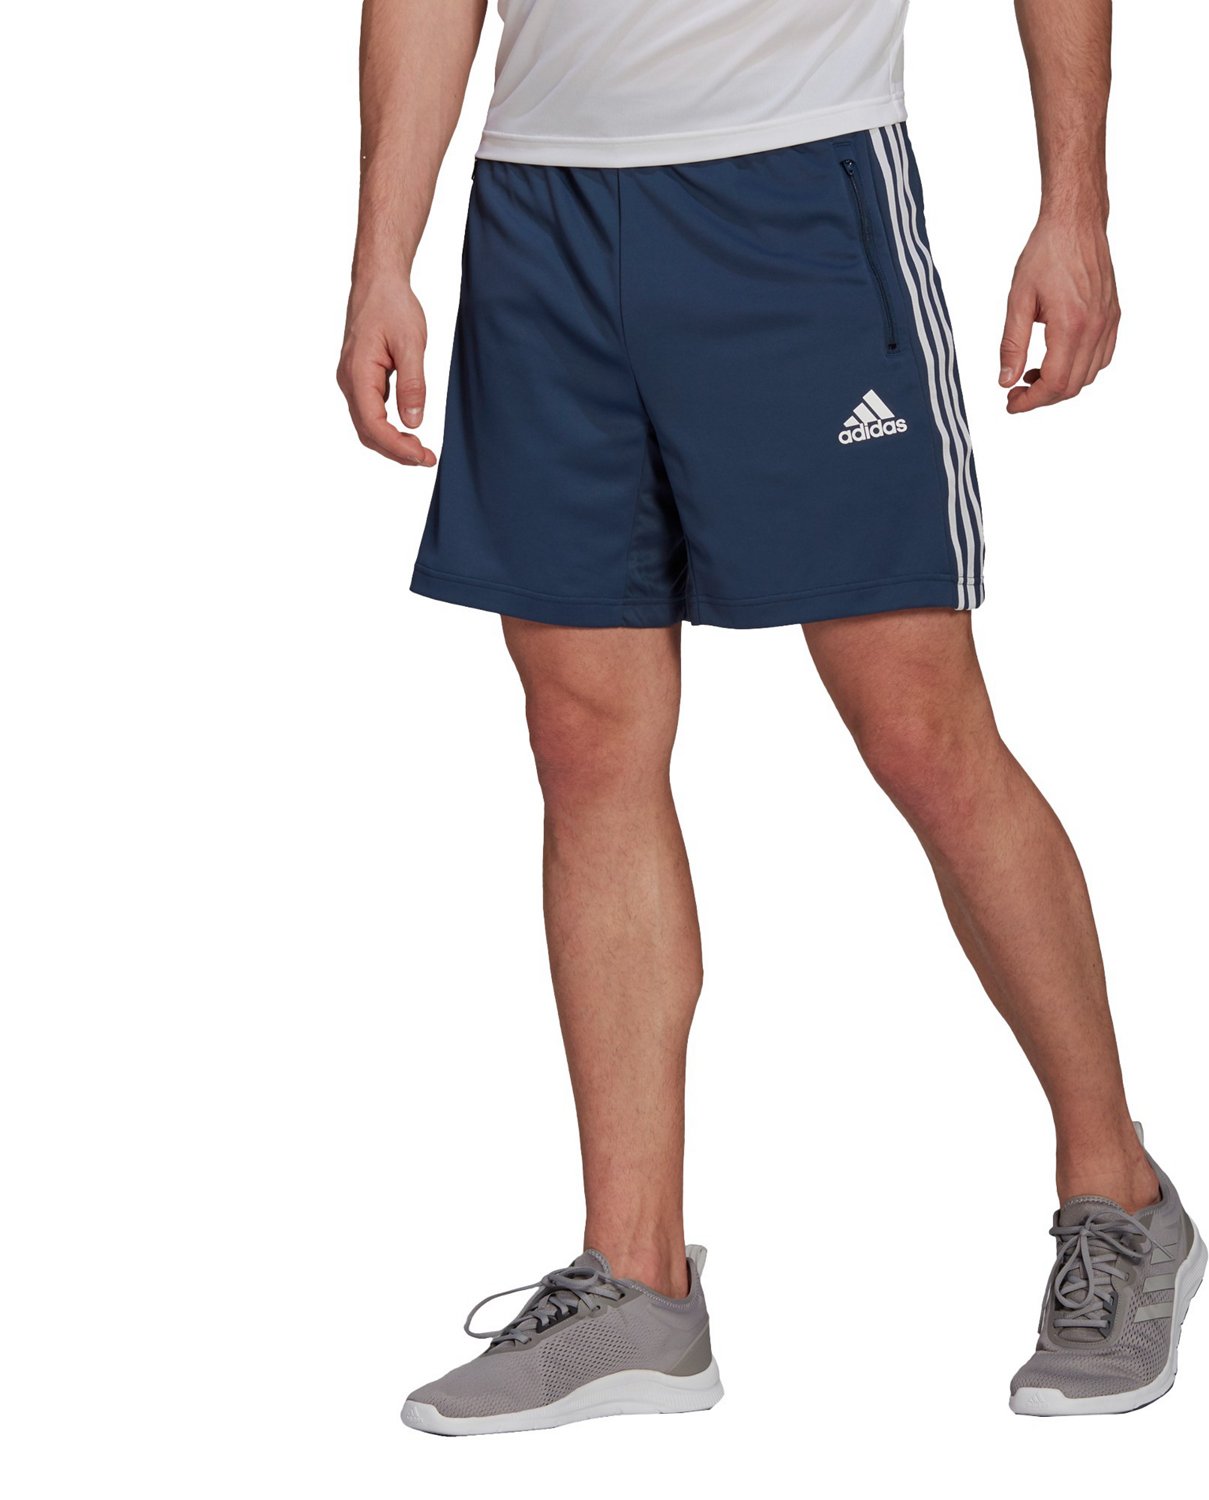 adidas Mens 3-Stripes Shorts